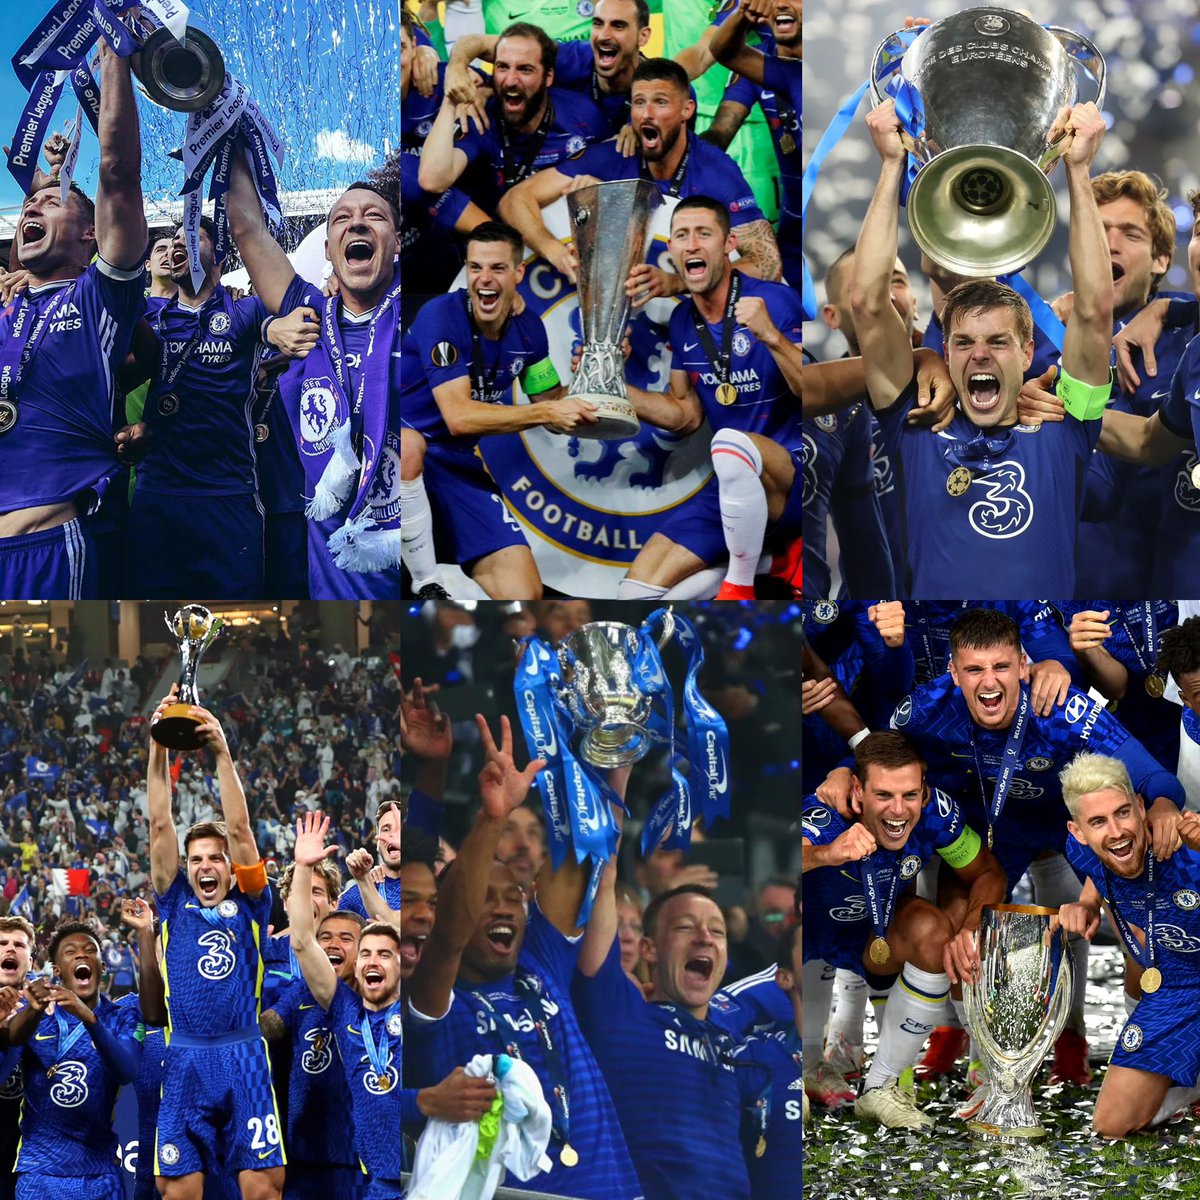 Chelsea are the last London club to win…

Premier League ✅ 
Champions League ✅
Europa League ✅
Club World Cup ✅
Super Cup ✅
League Cup ✅